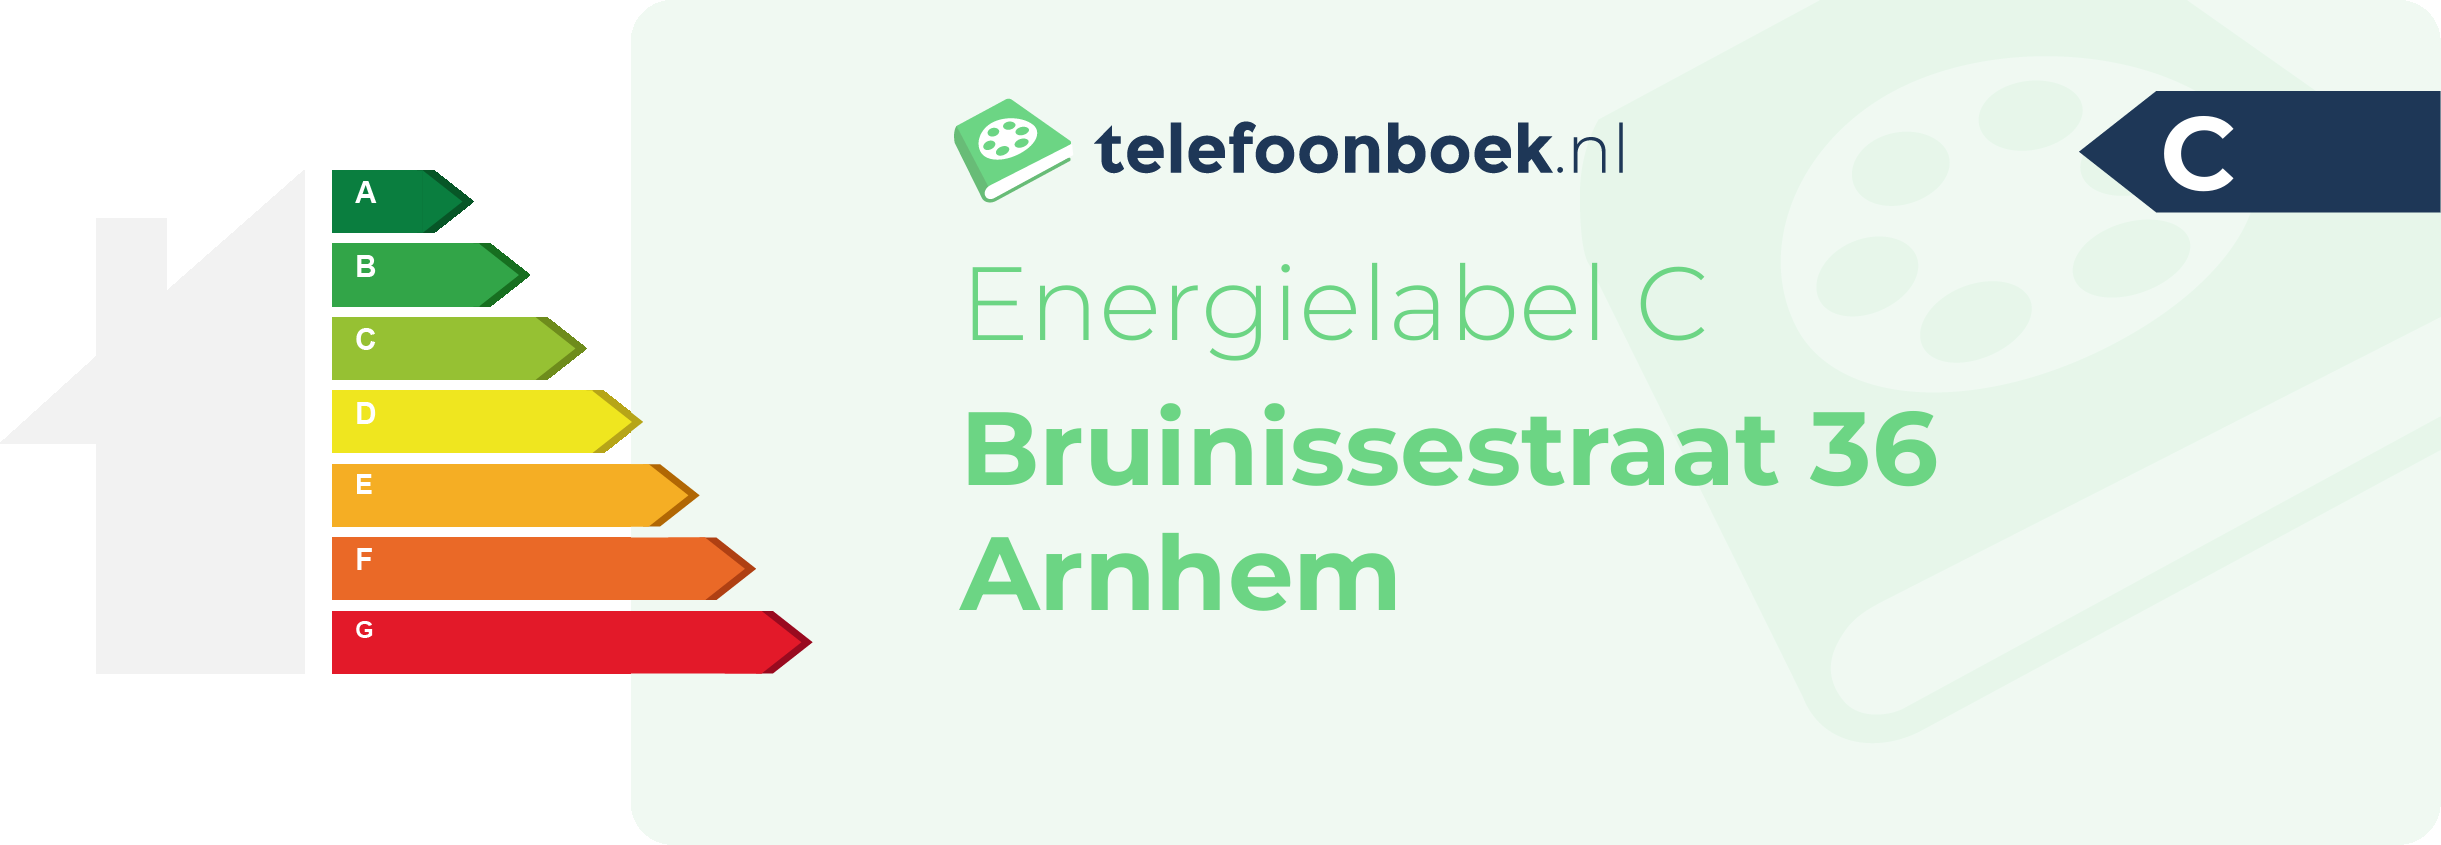 Energielabel Bruinissestraat 36 Arnhem